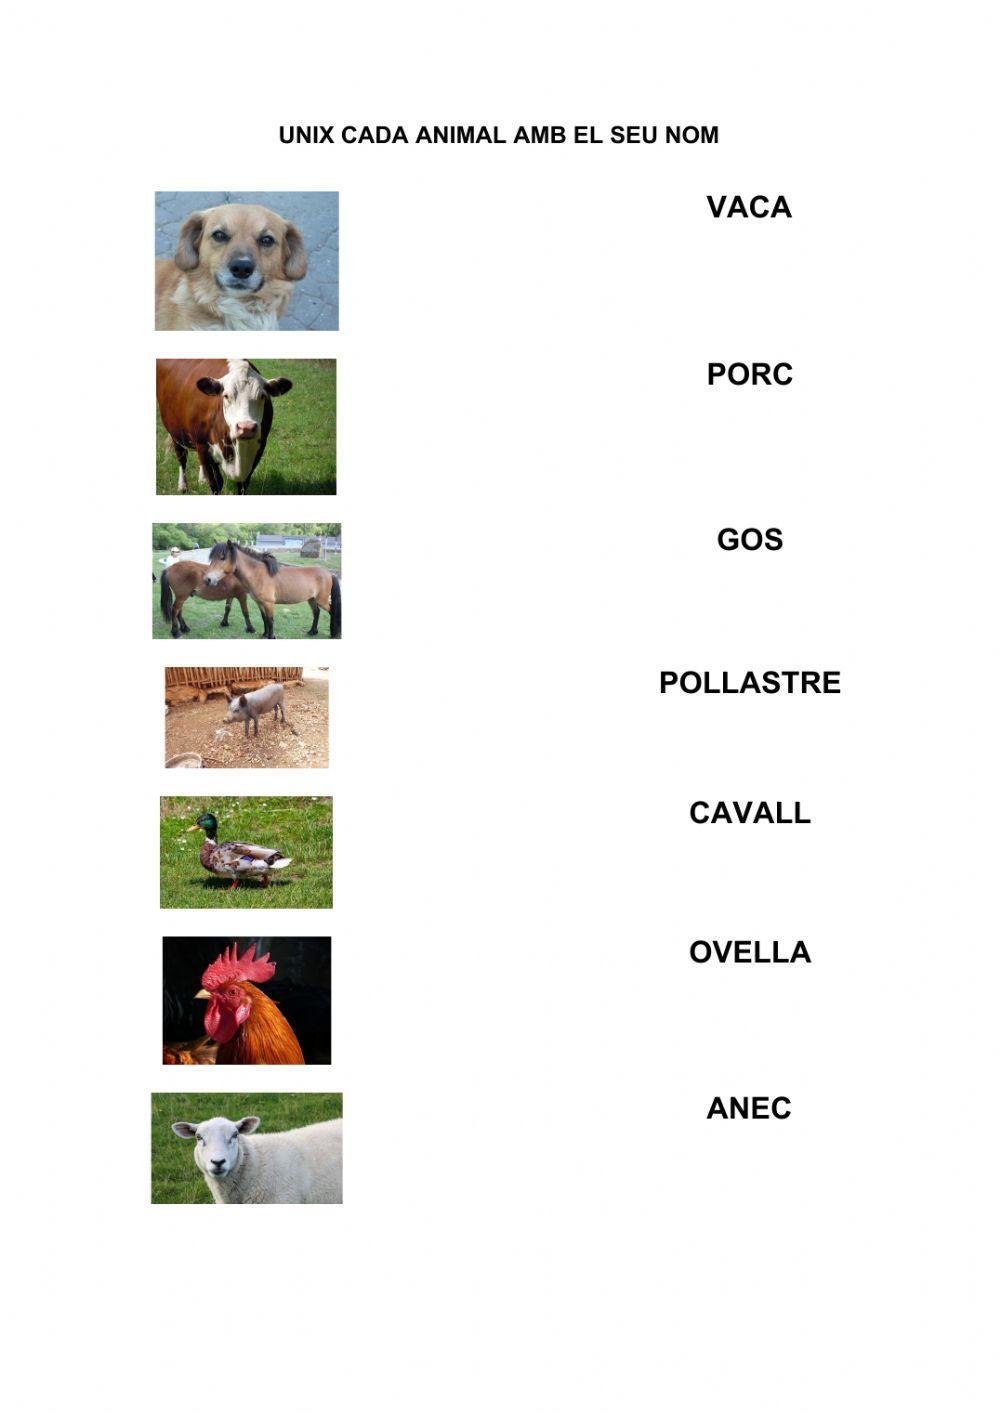 Vocabulari : animals de granja